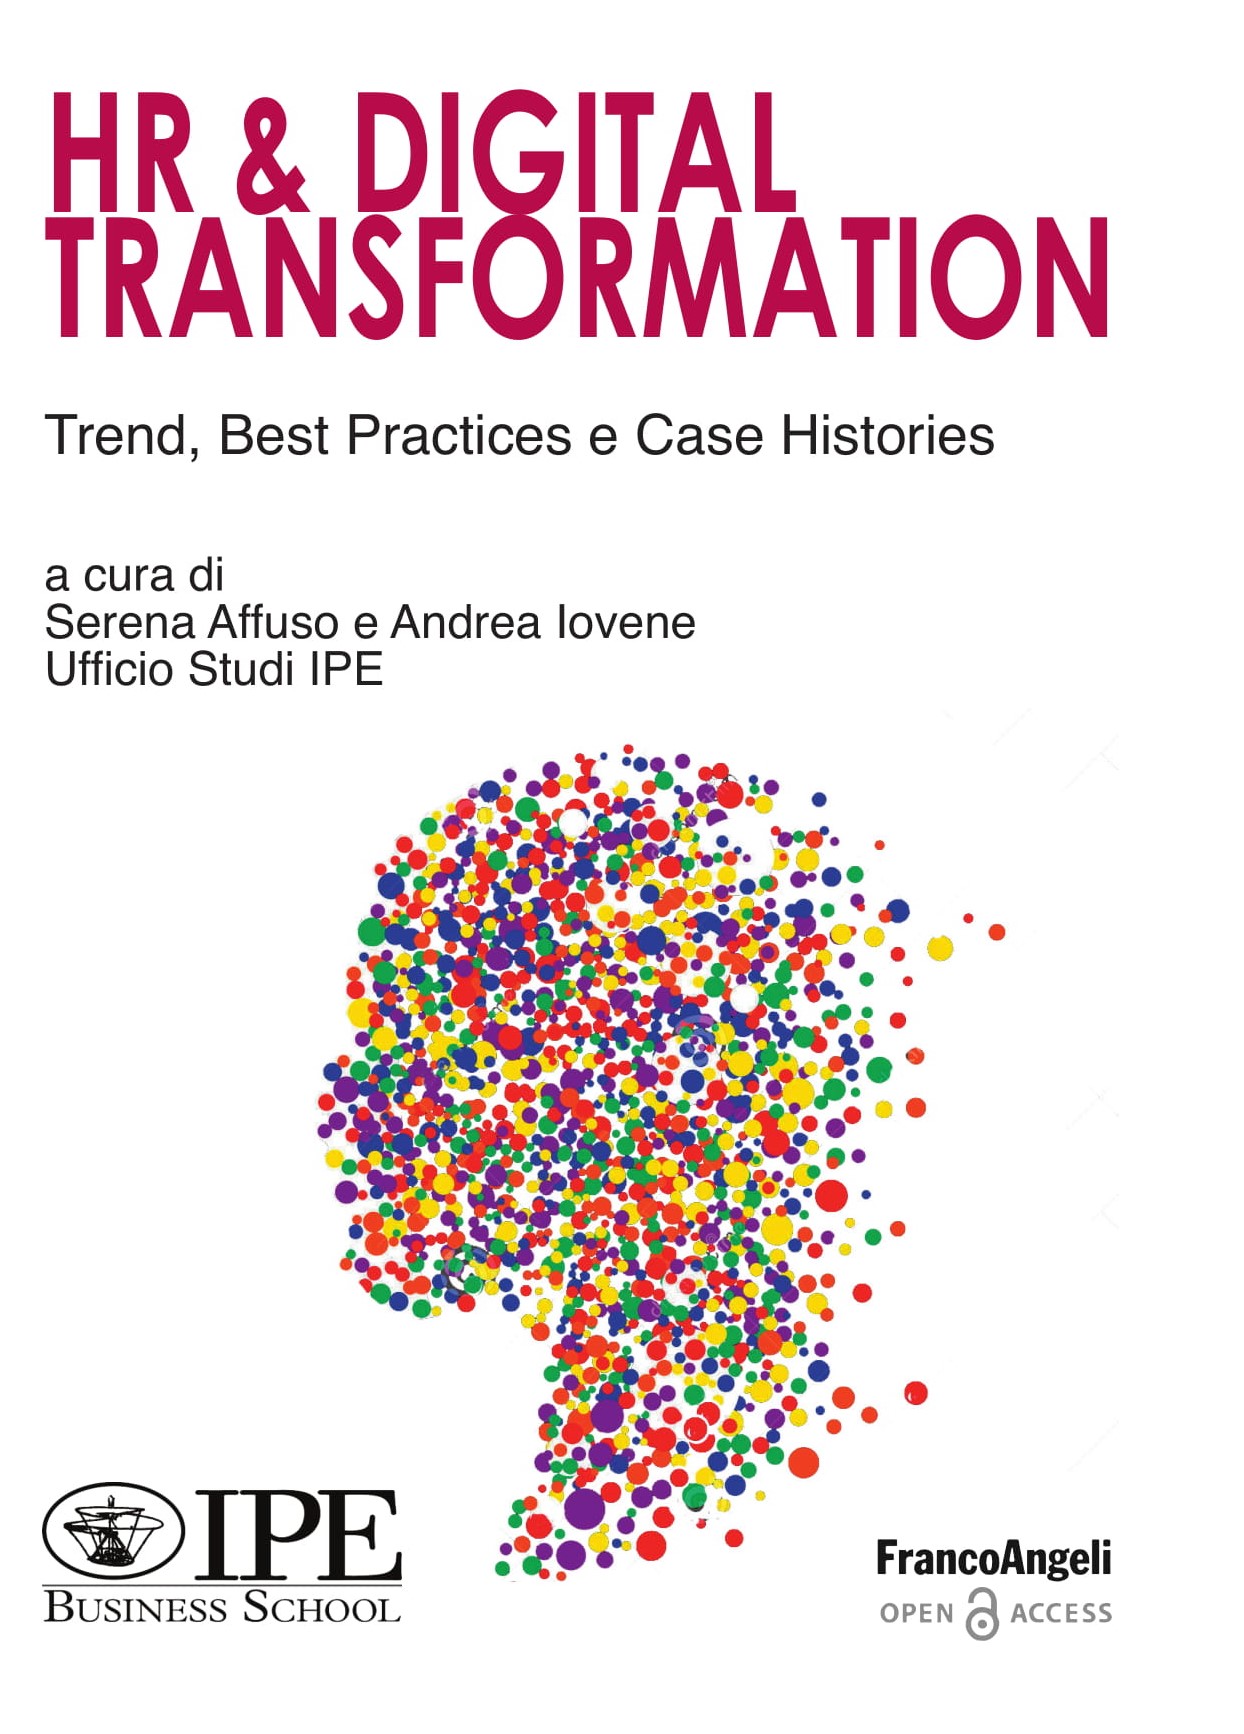 HR & Digital TransformationTrend, Best Practices e Case Histories